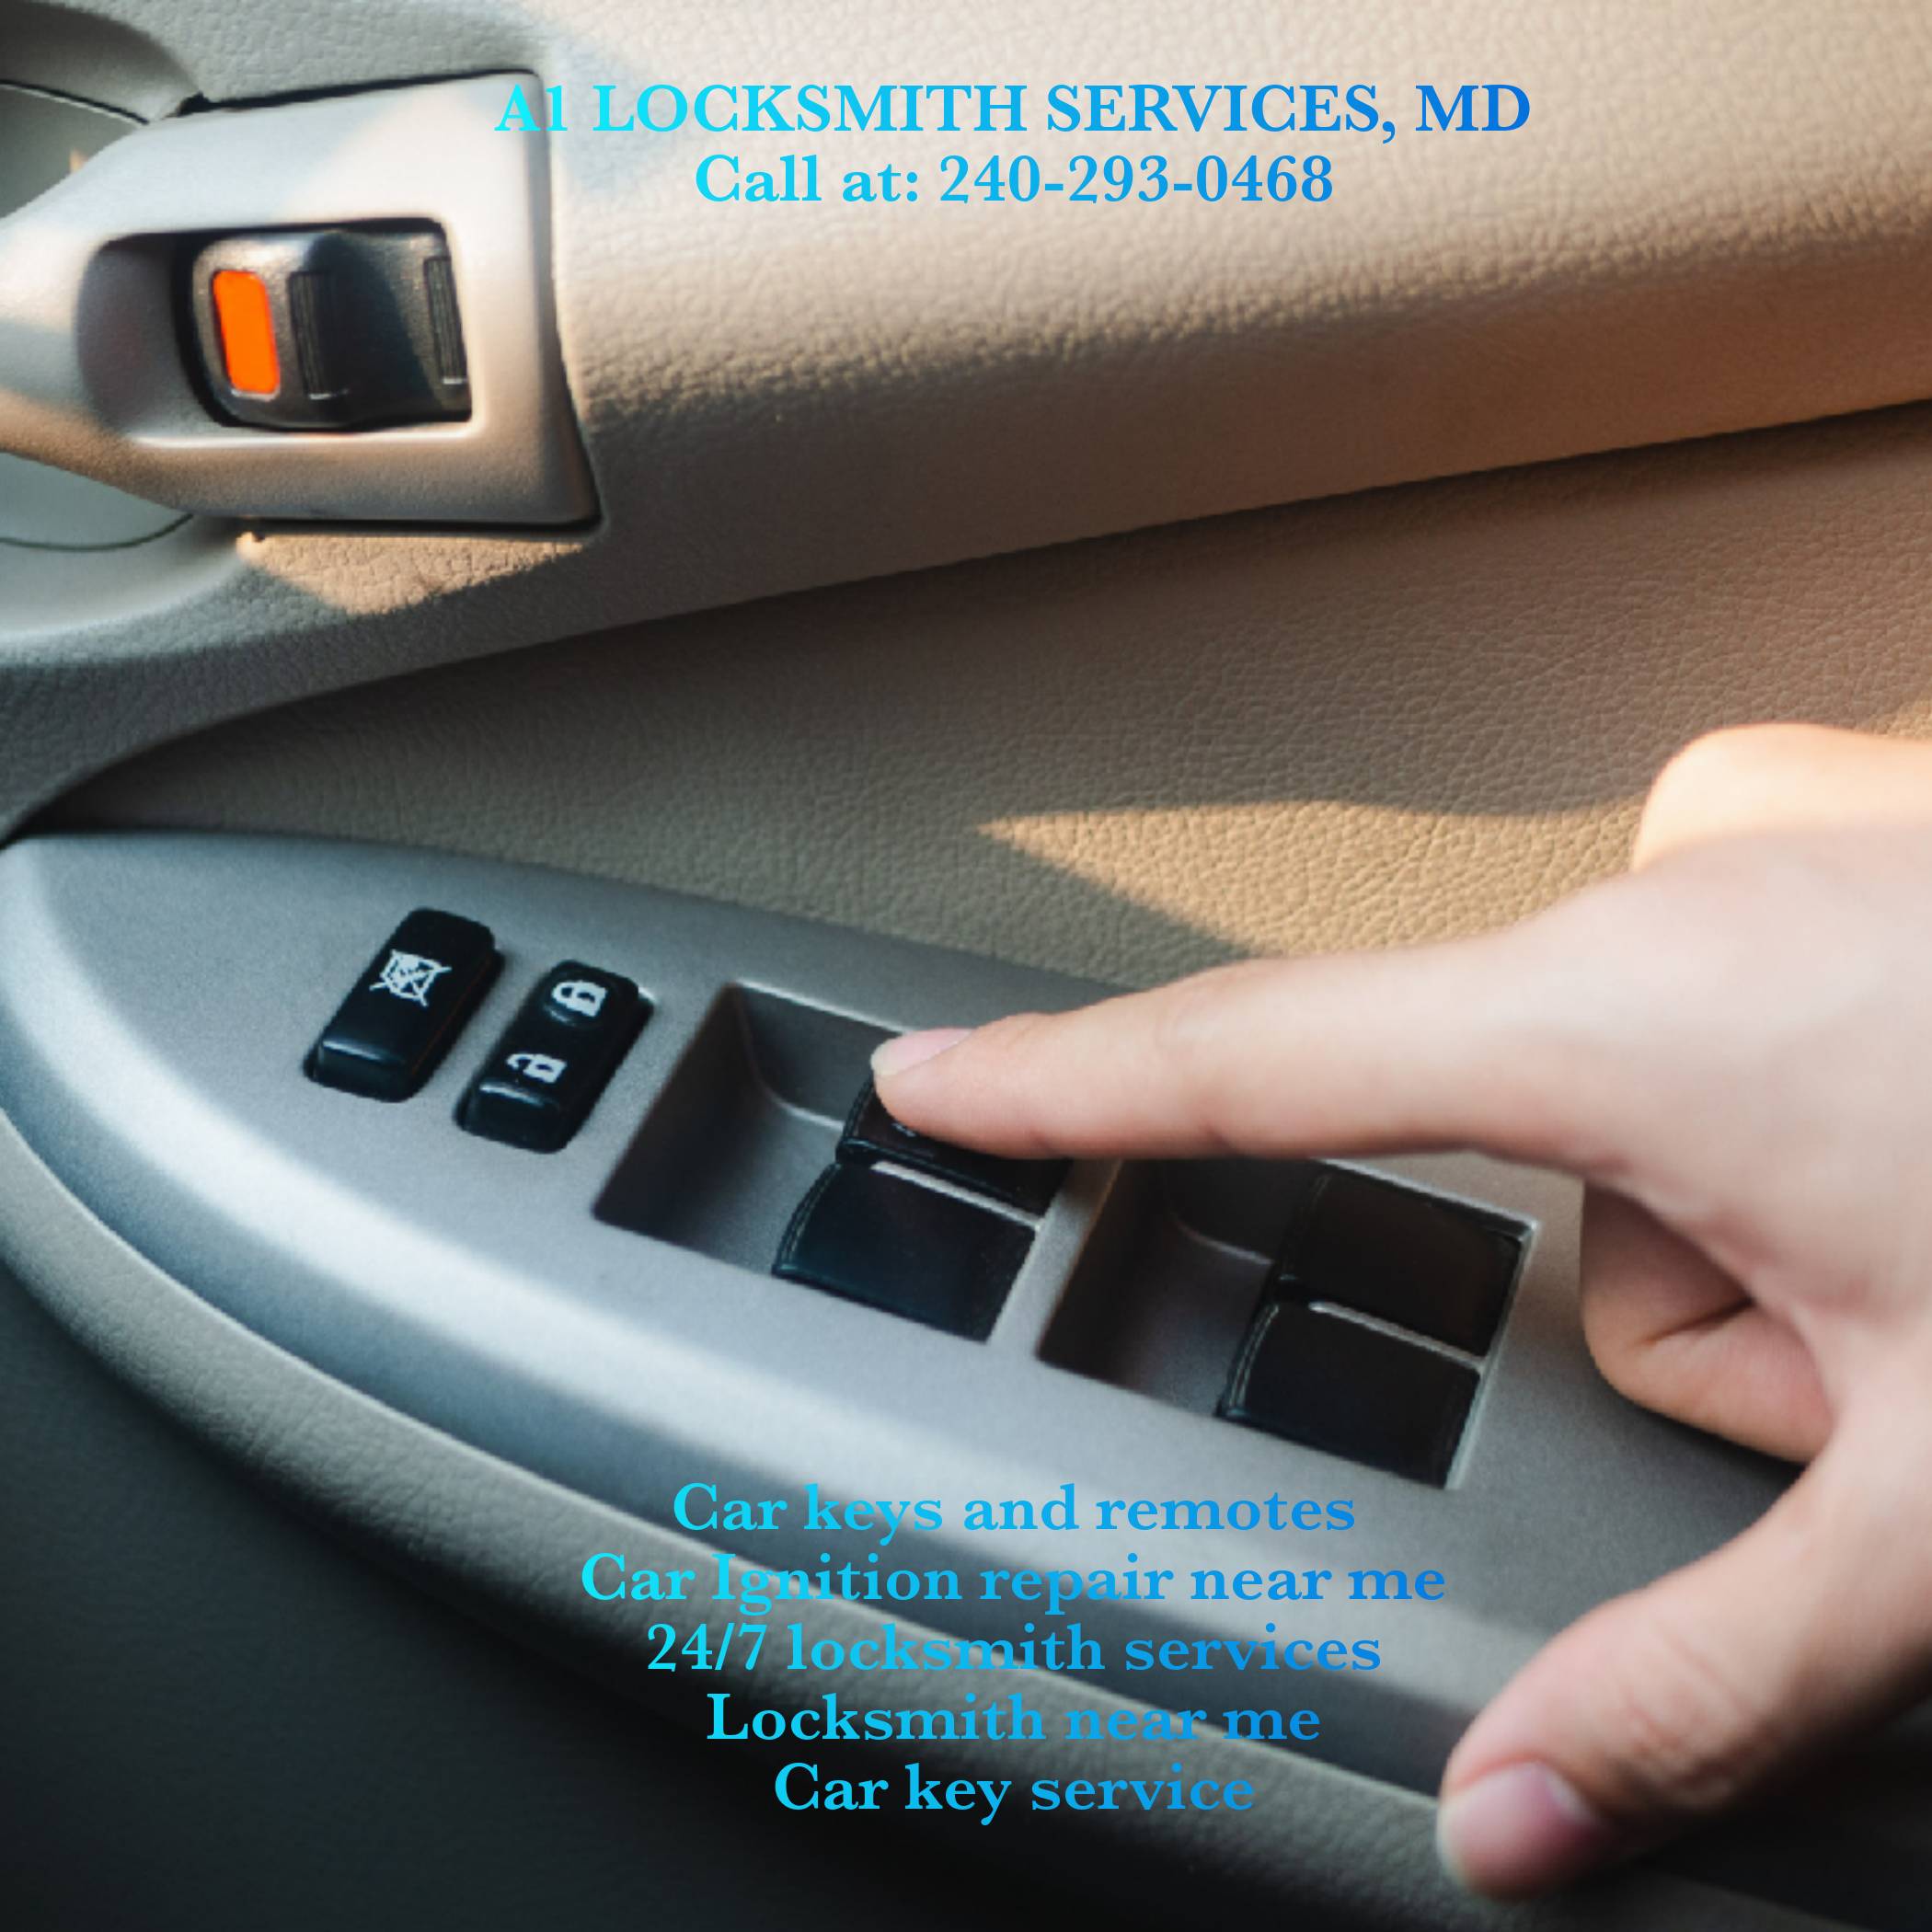 Locksmith Services